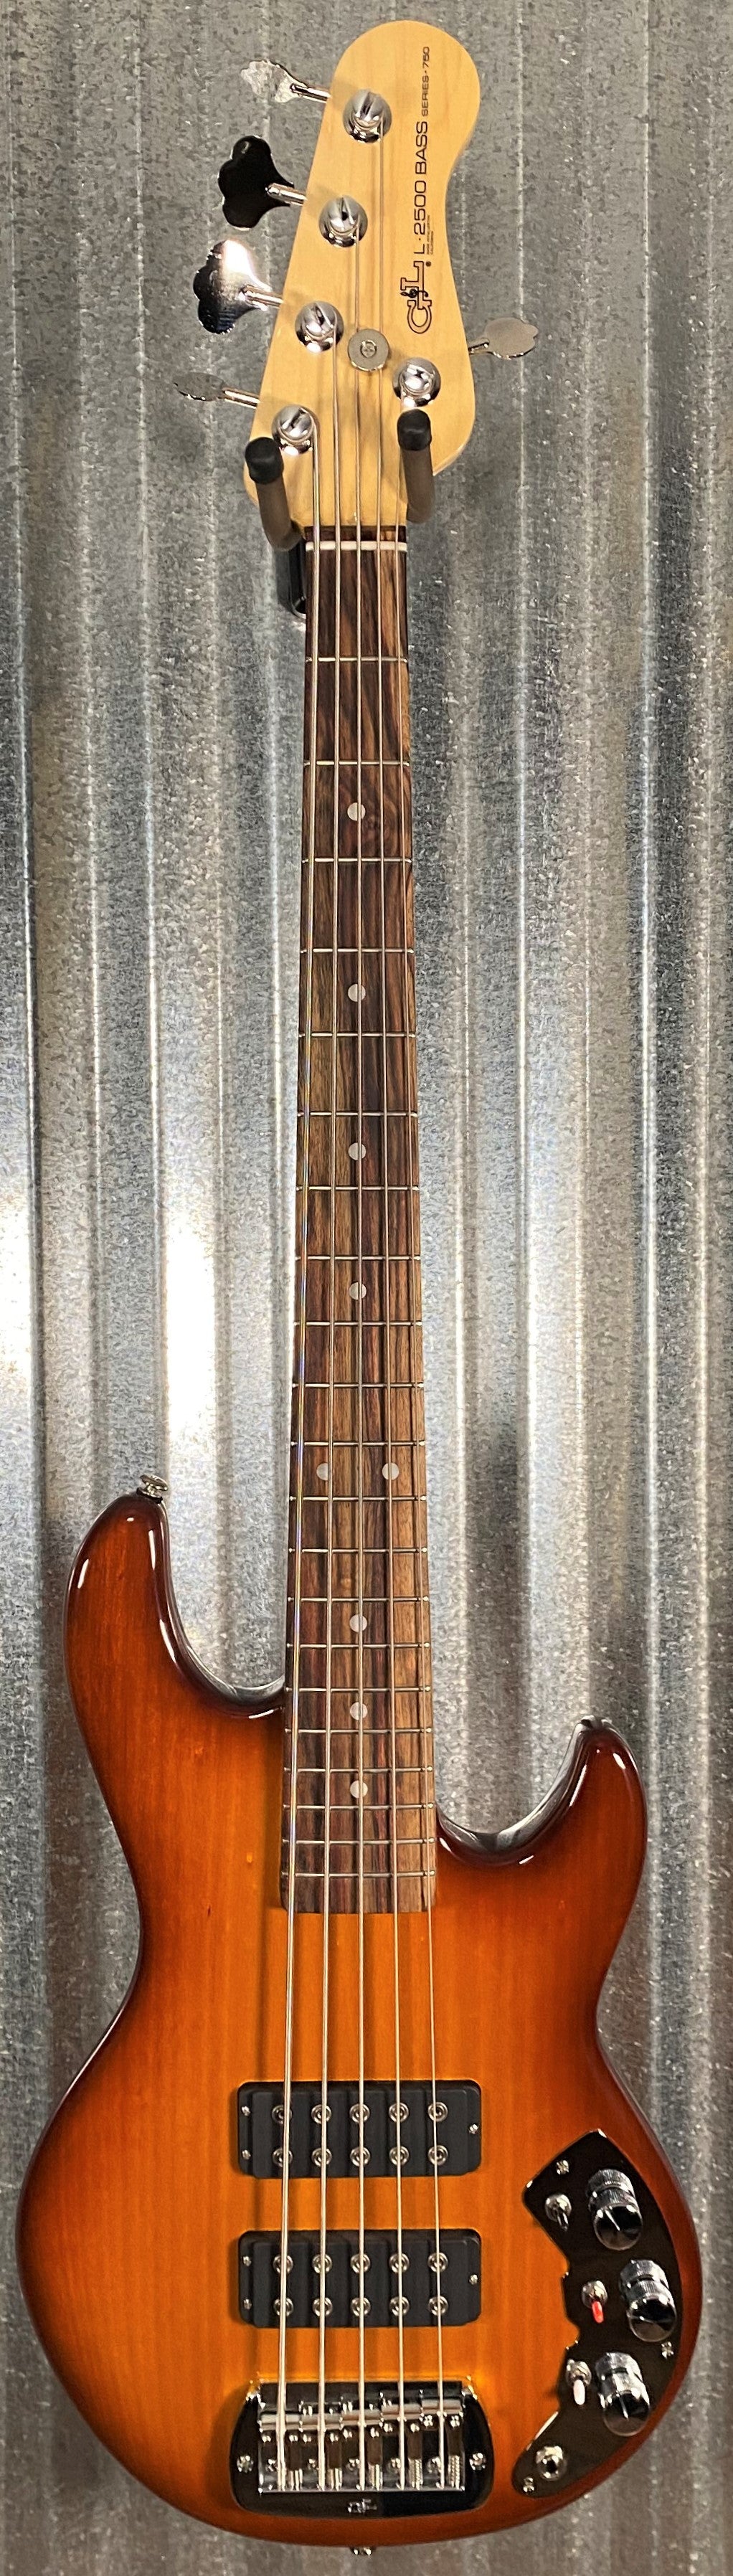 G&L USA CLF L-2500 S750 Old School Tobacco Sunburst 5 String Bass & Case #4168